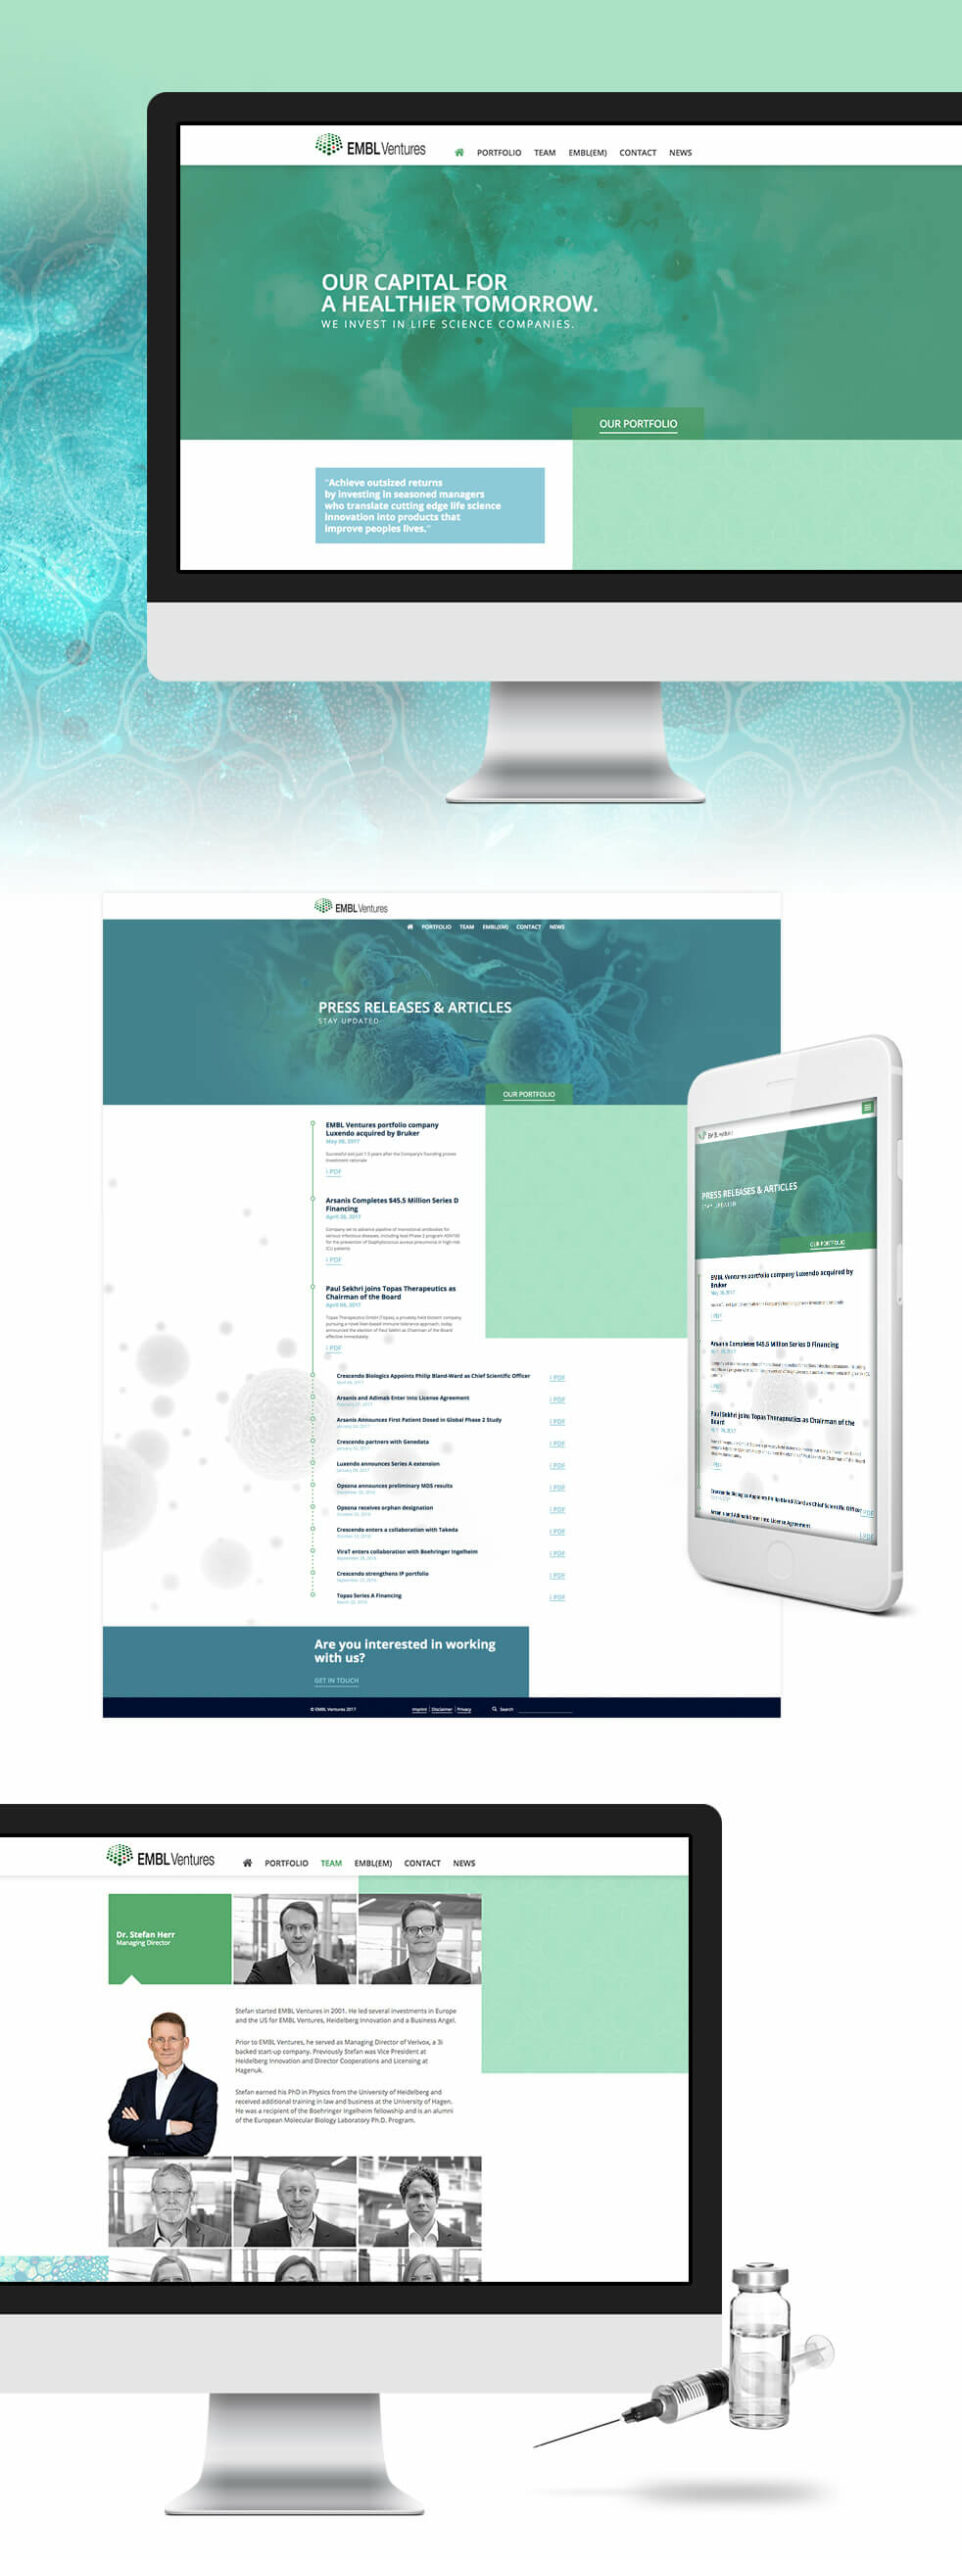 EMBL Ventures - Website Redesign